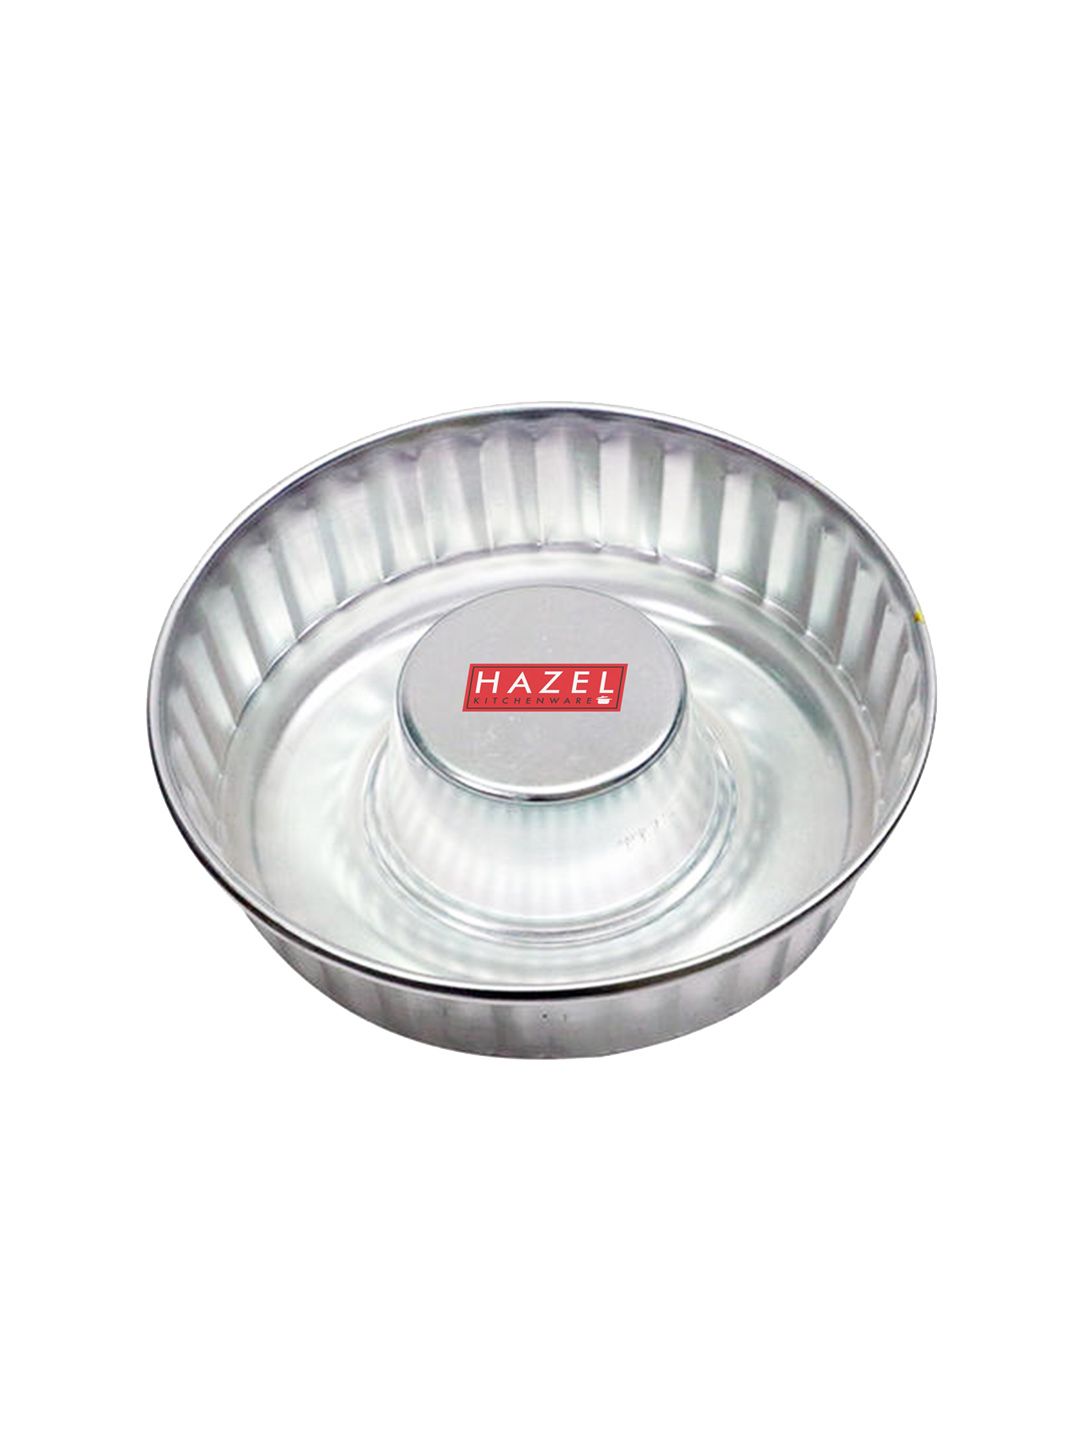 HAZEL Silver-Toned Donut Mould Aluminium Tray Pan Price in India